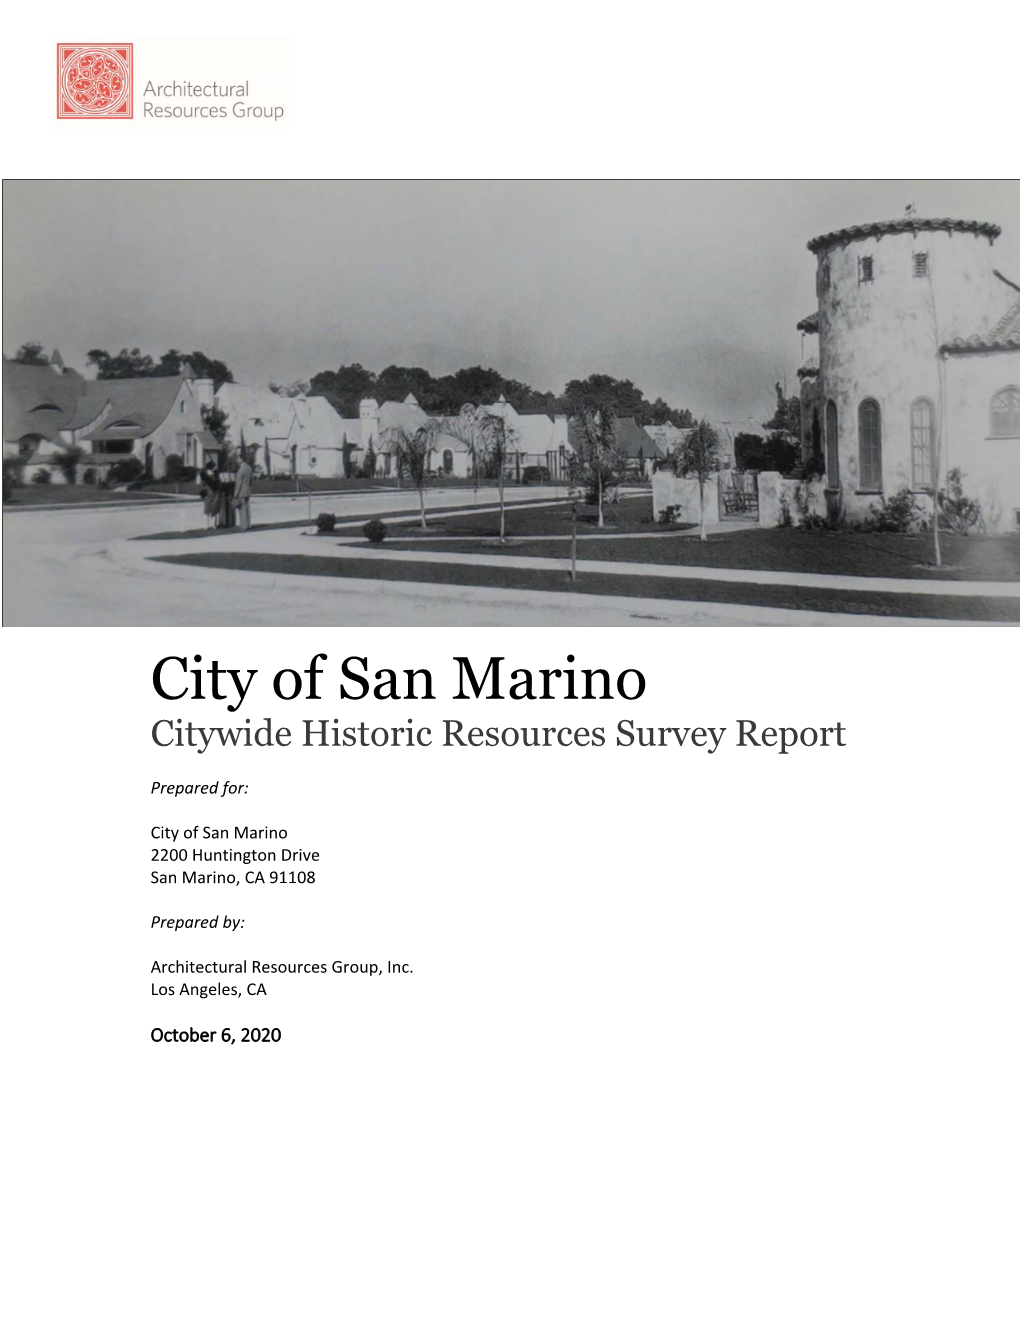 Citywide Historic Resources Survey Report